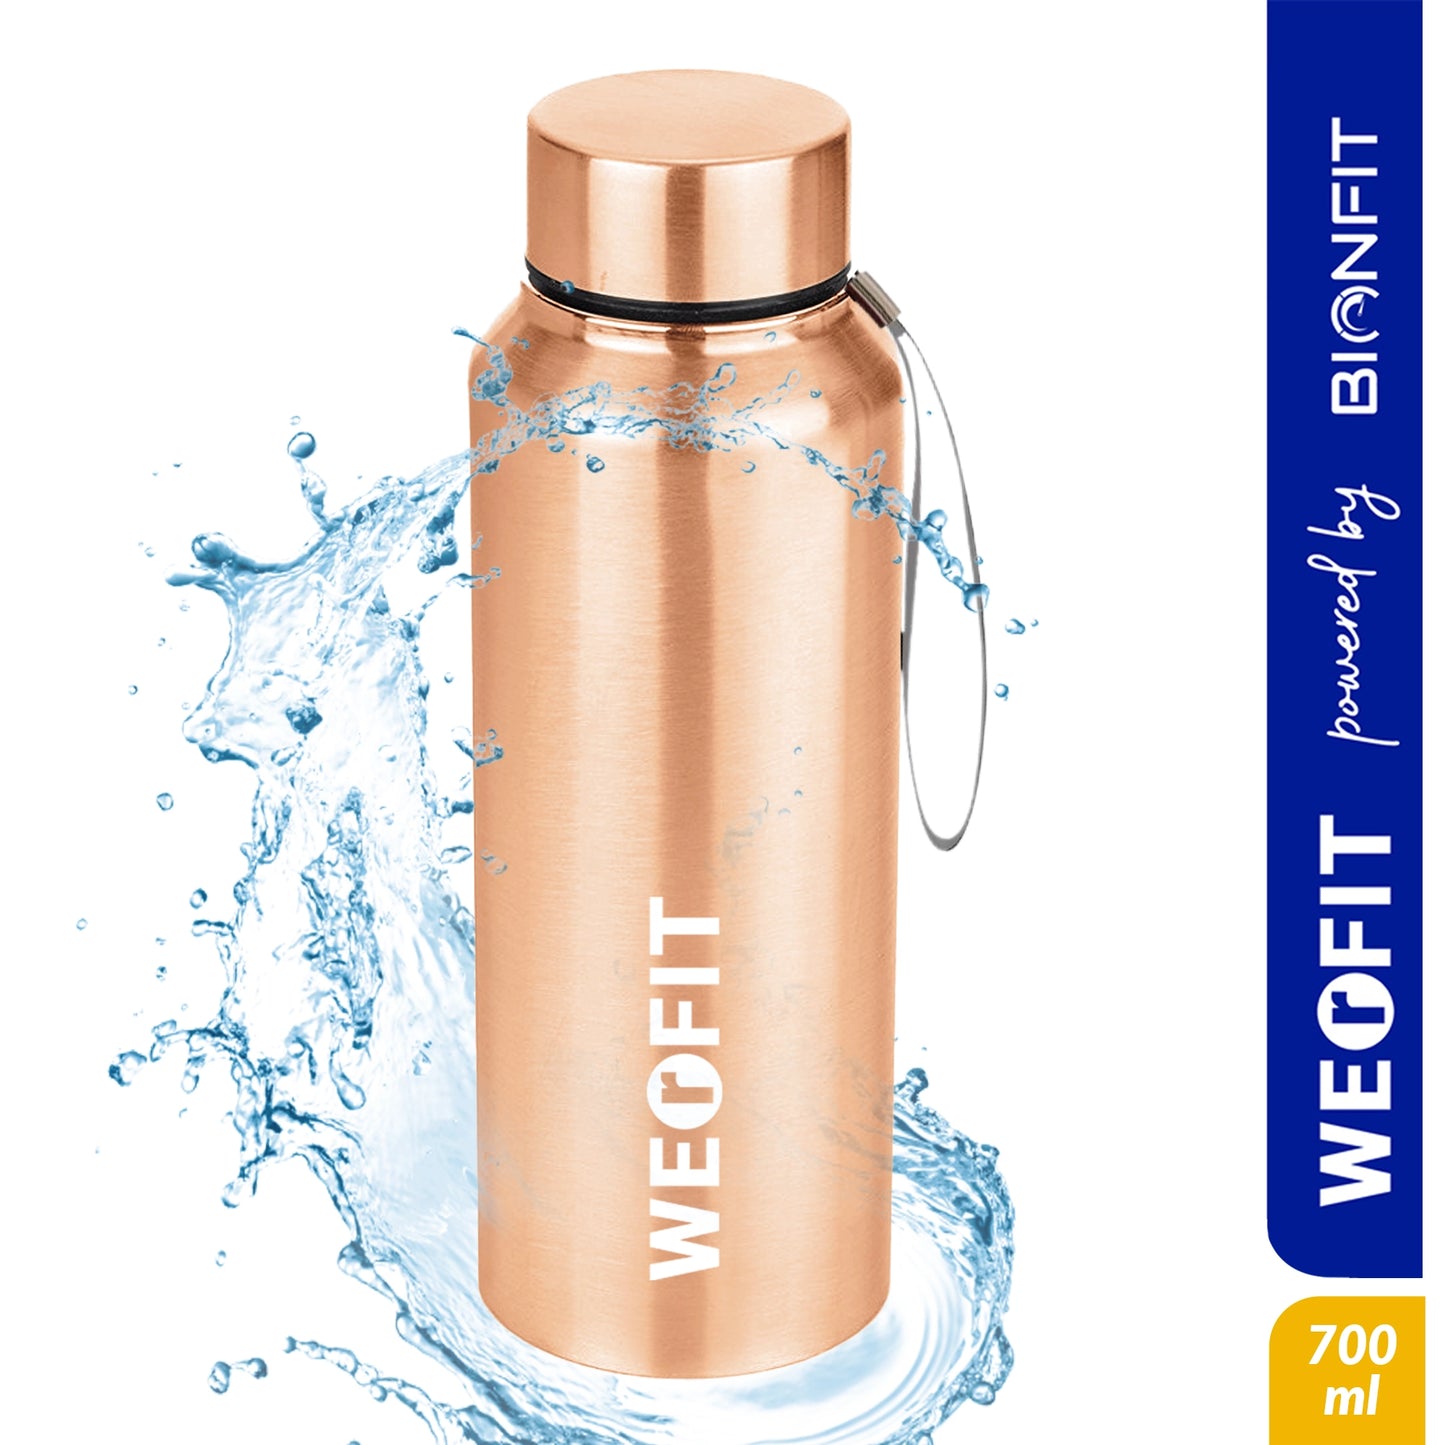 WErFIT Steel Water Bottle for Sports, Hiking, Home, Gym, Office, School, Carrying Strap 700 ml Shaker